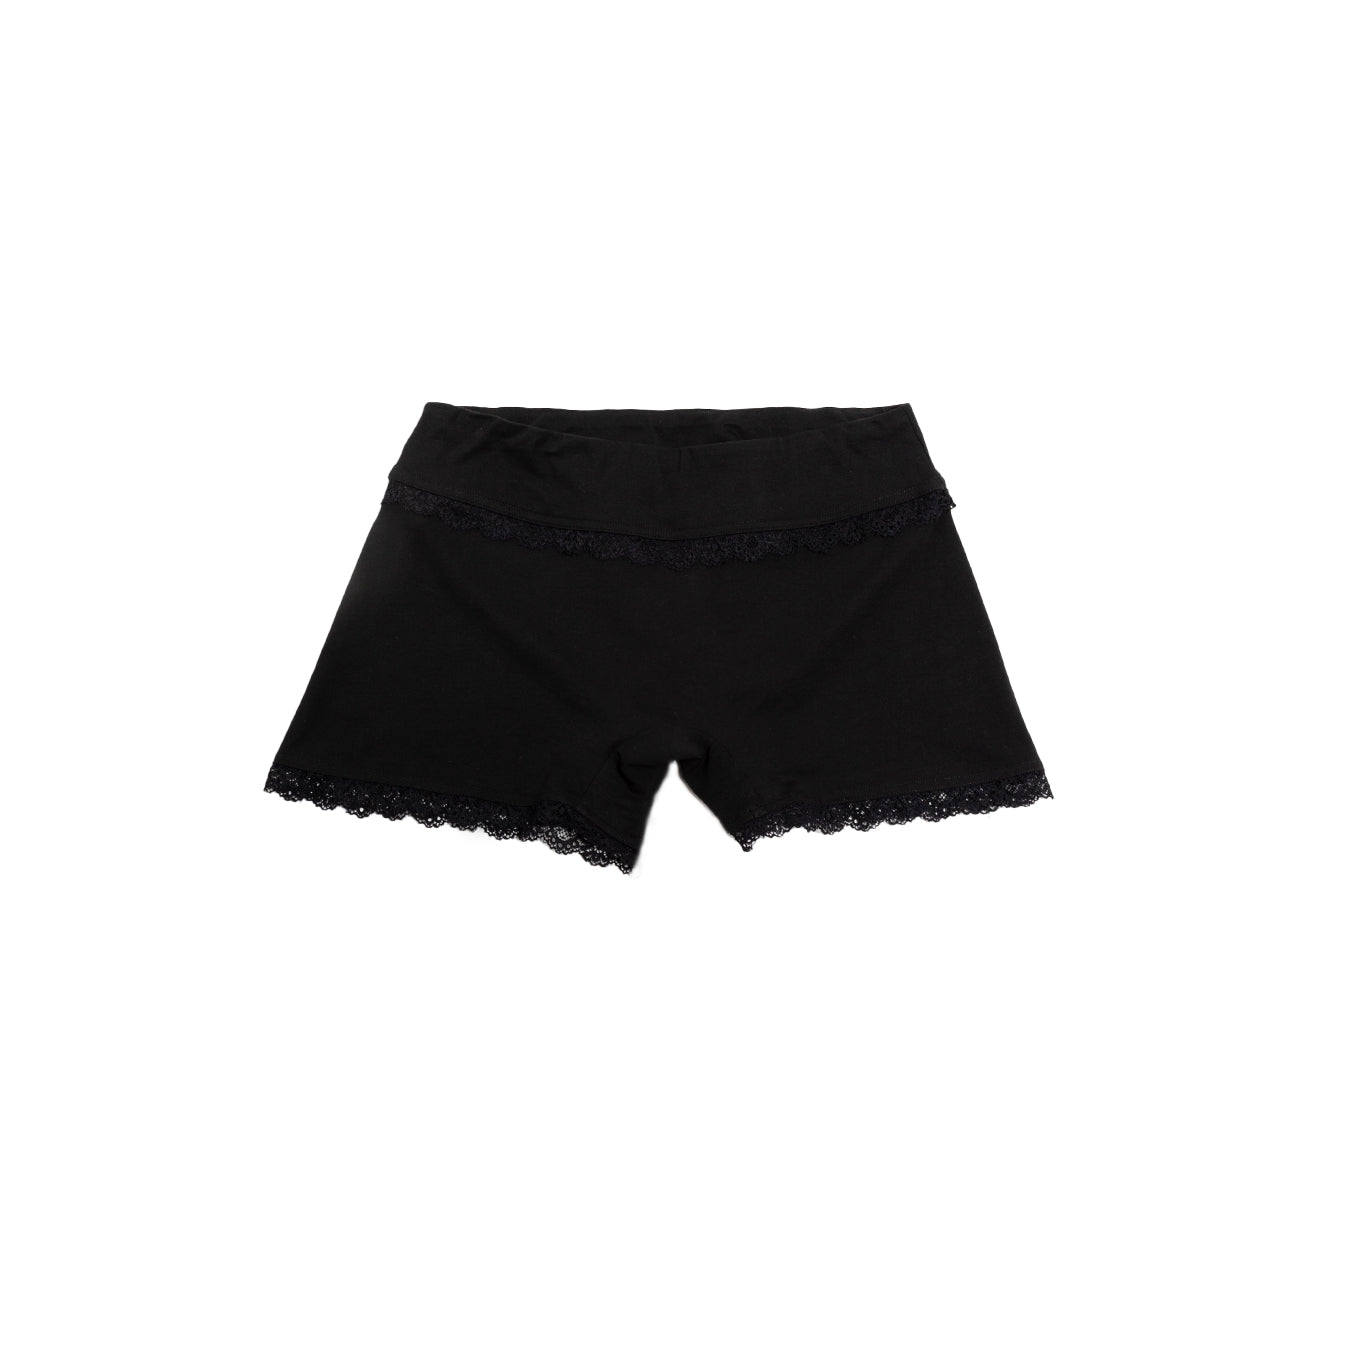 Prngrphy – Black "Thank God" Lace Trim Mini Shorts